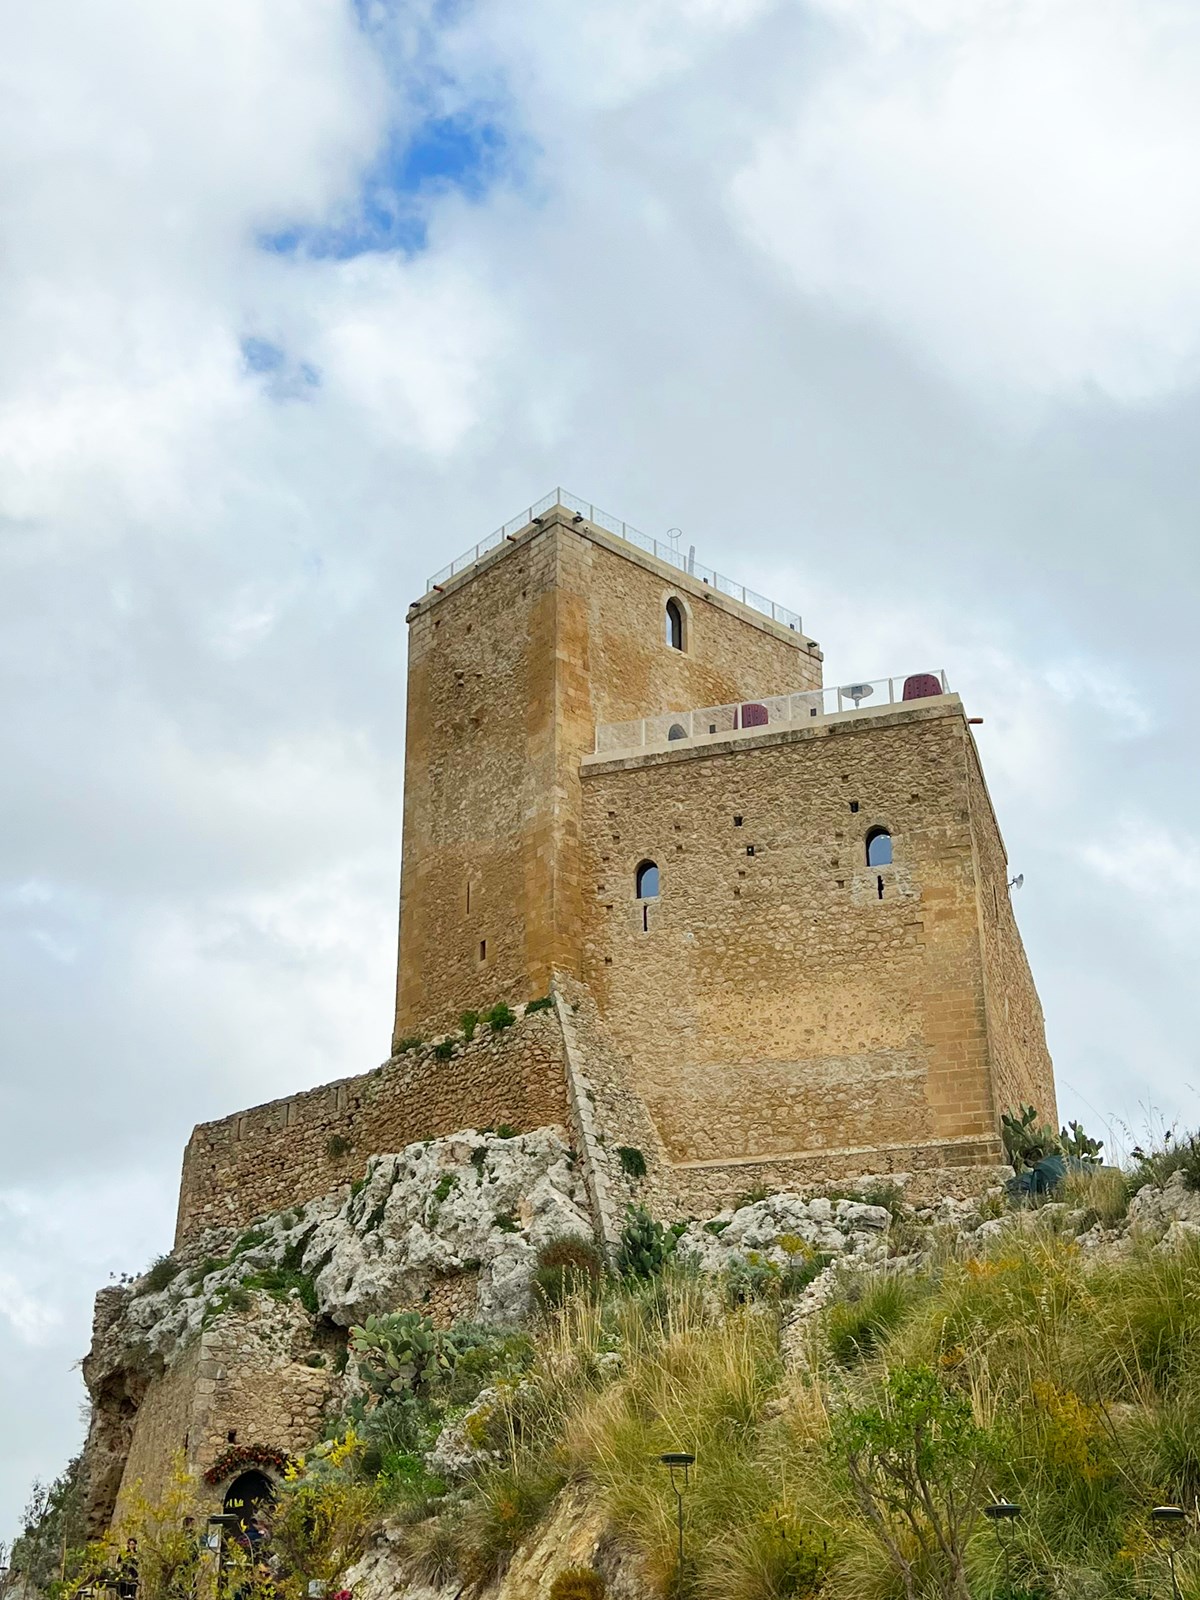 Castello Serravalle